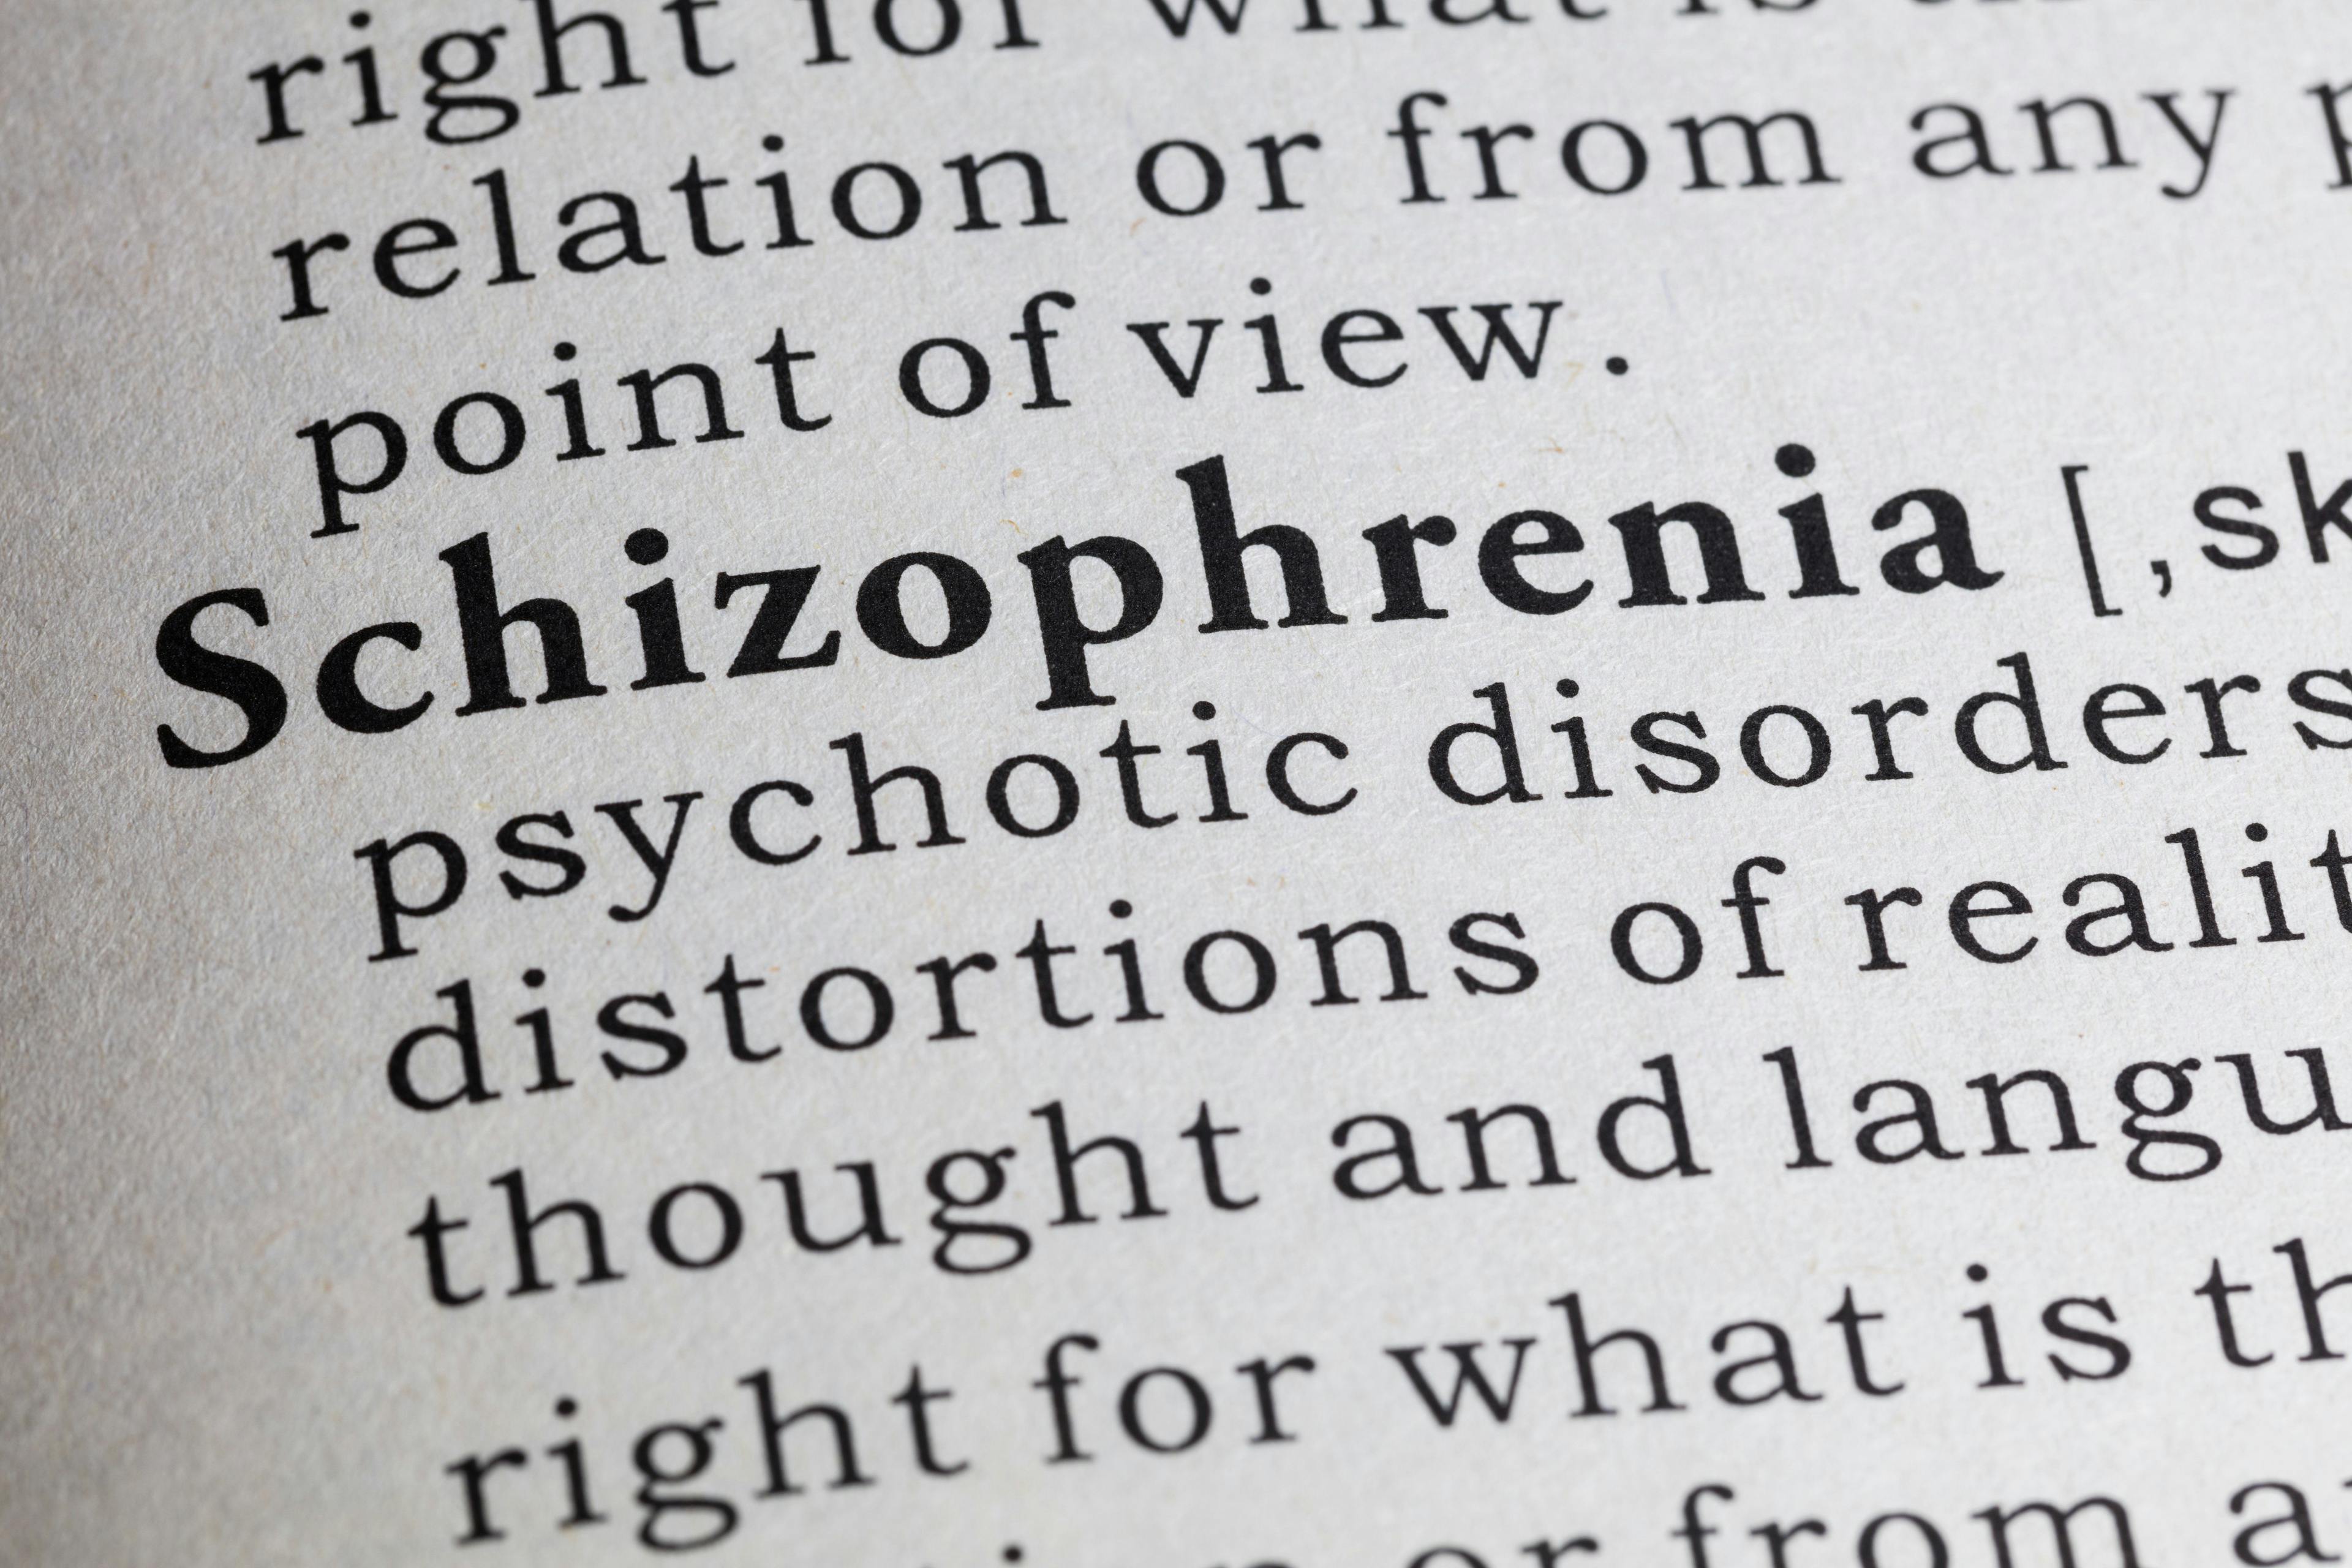 Schizophrenia and Long-Acting Injectable Antipsychotics